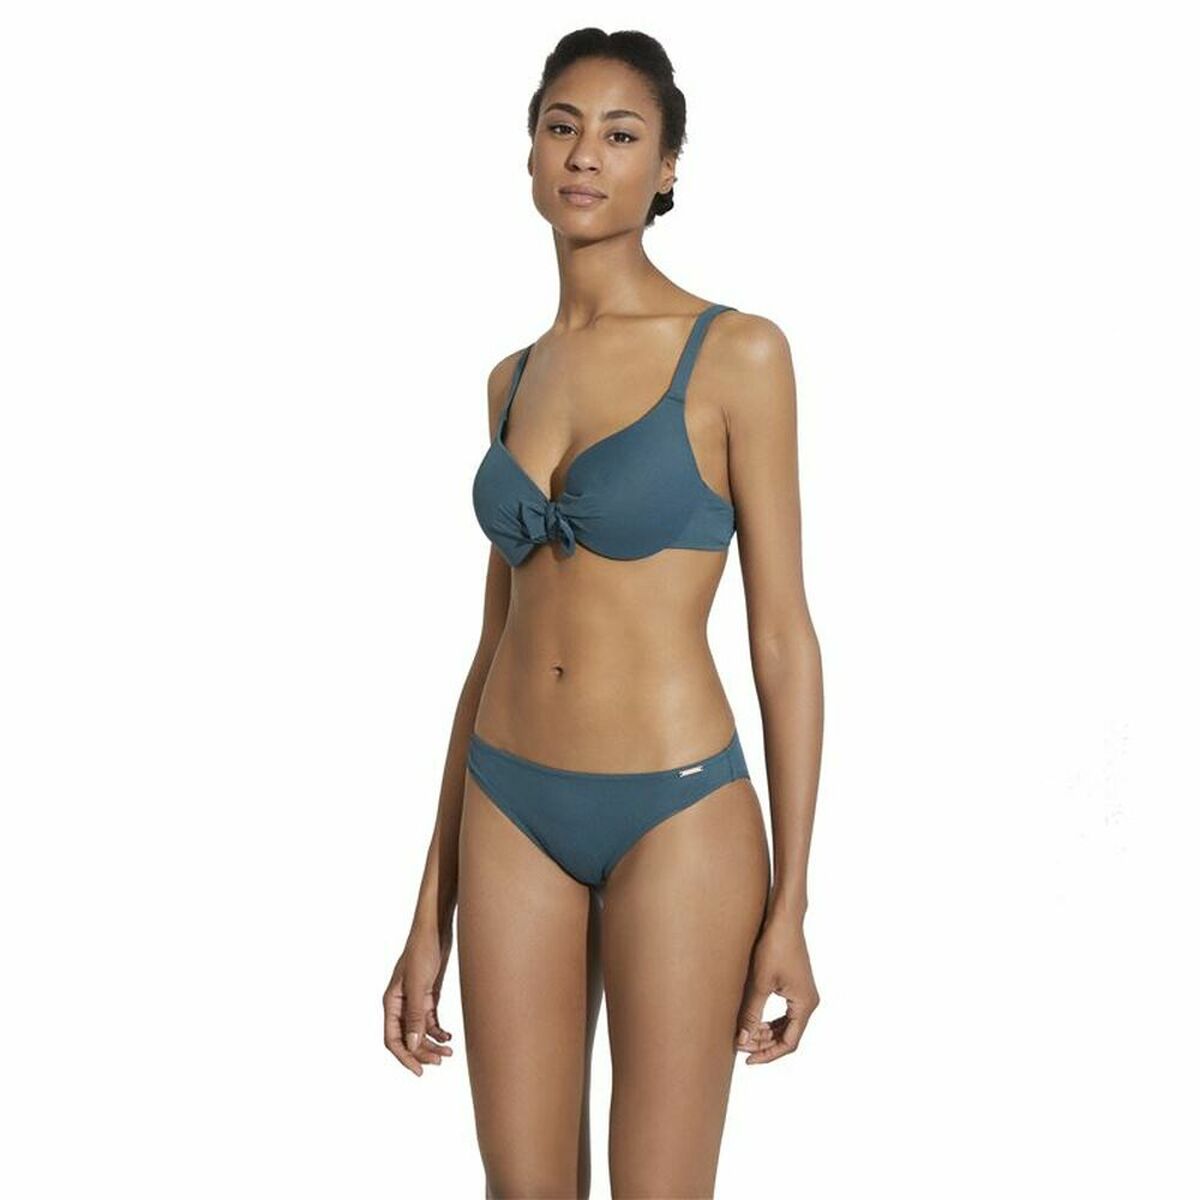 Chiloți Ysabel Mora Neted Verde Bikini - Mărime L